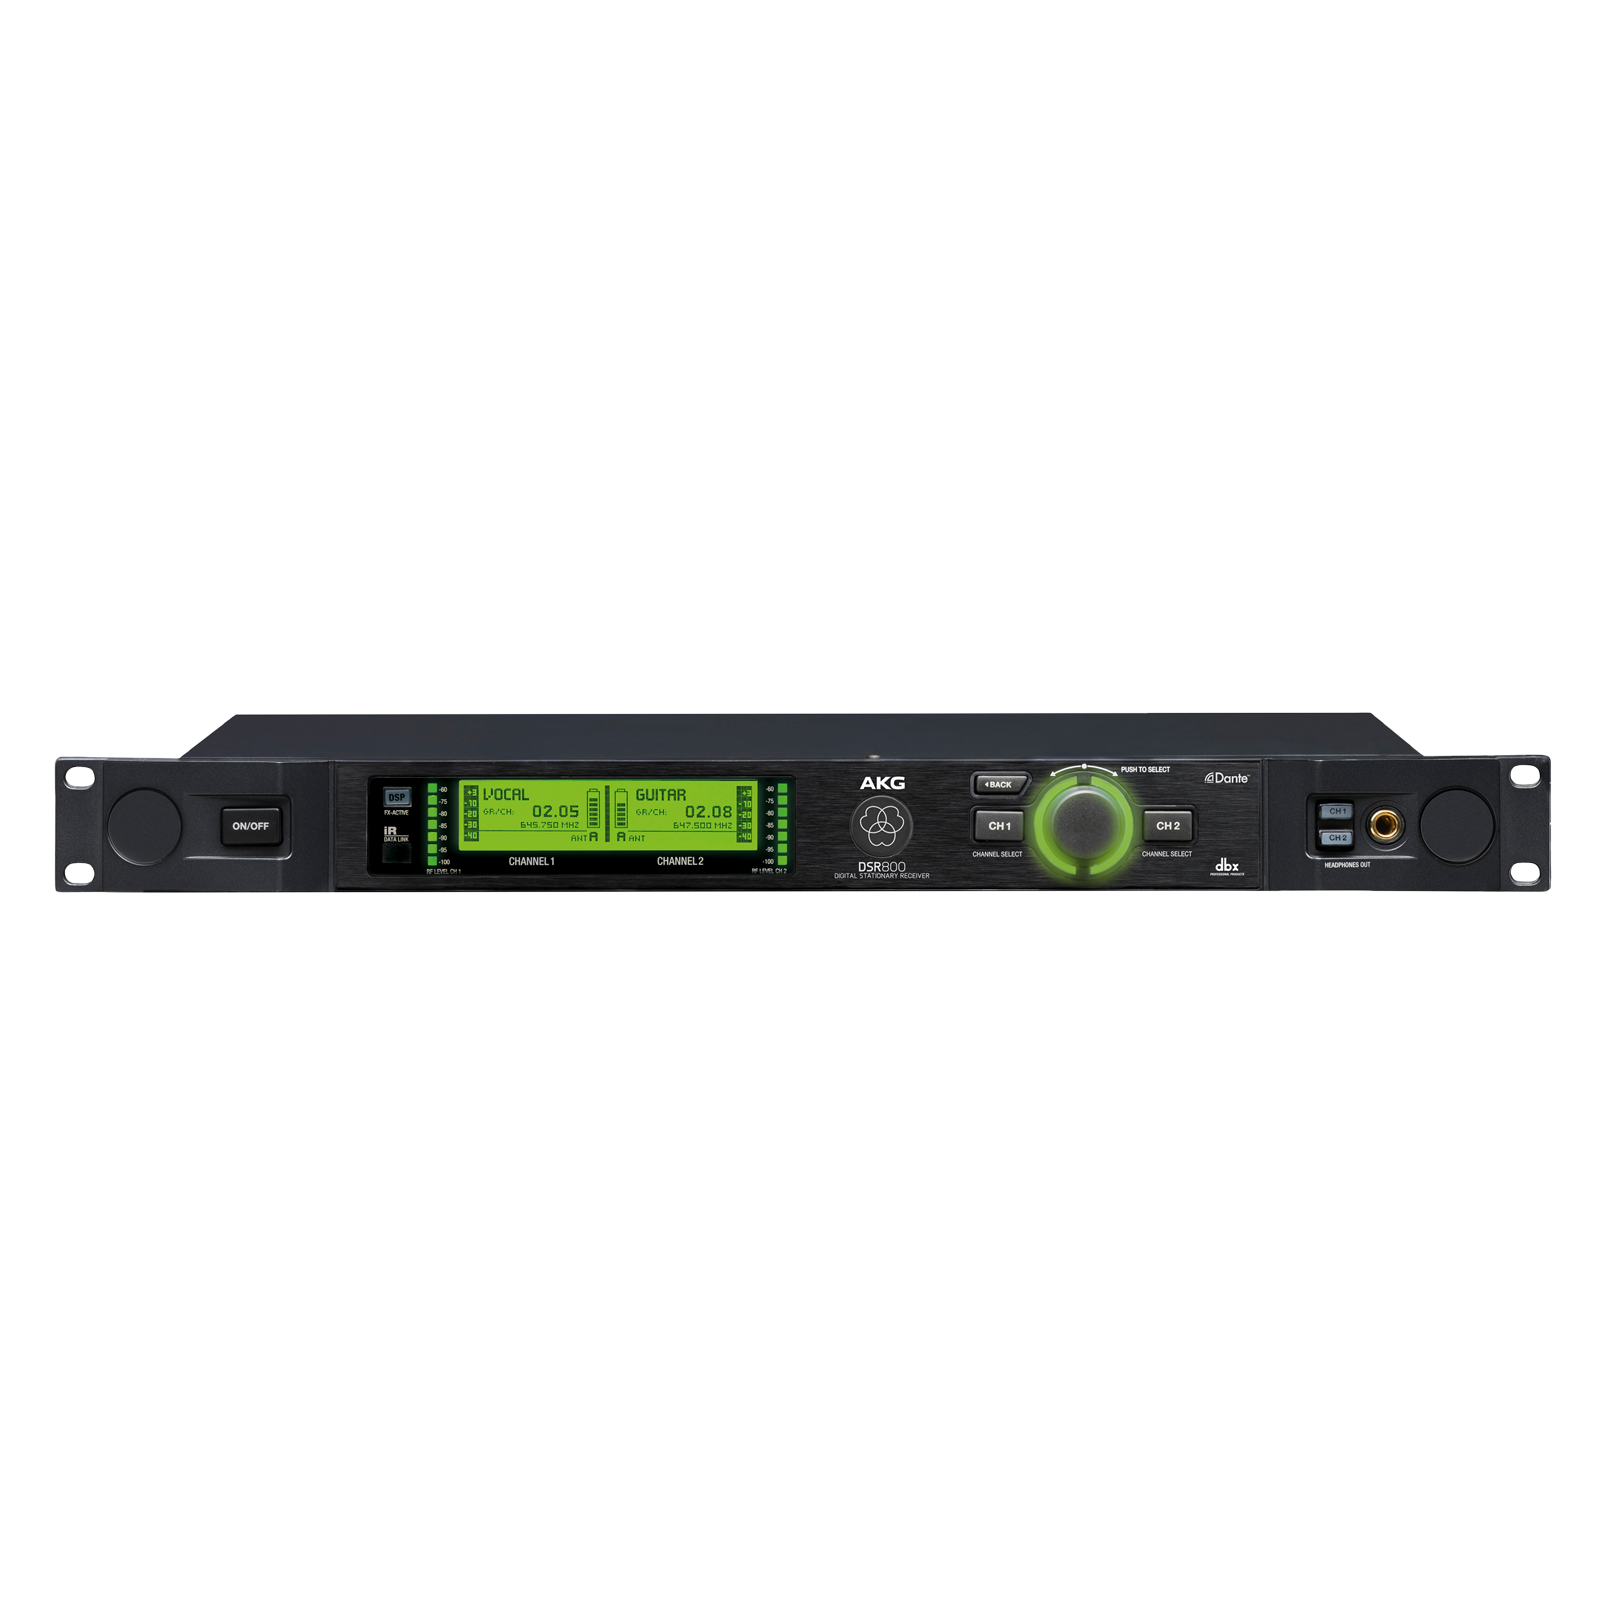 DSR800 Band1 (B-Stock) - Black - Reference digital wireless stationary receiver - Detailshot 1